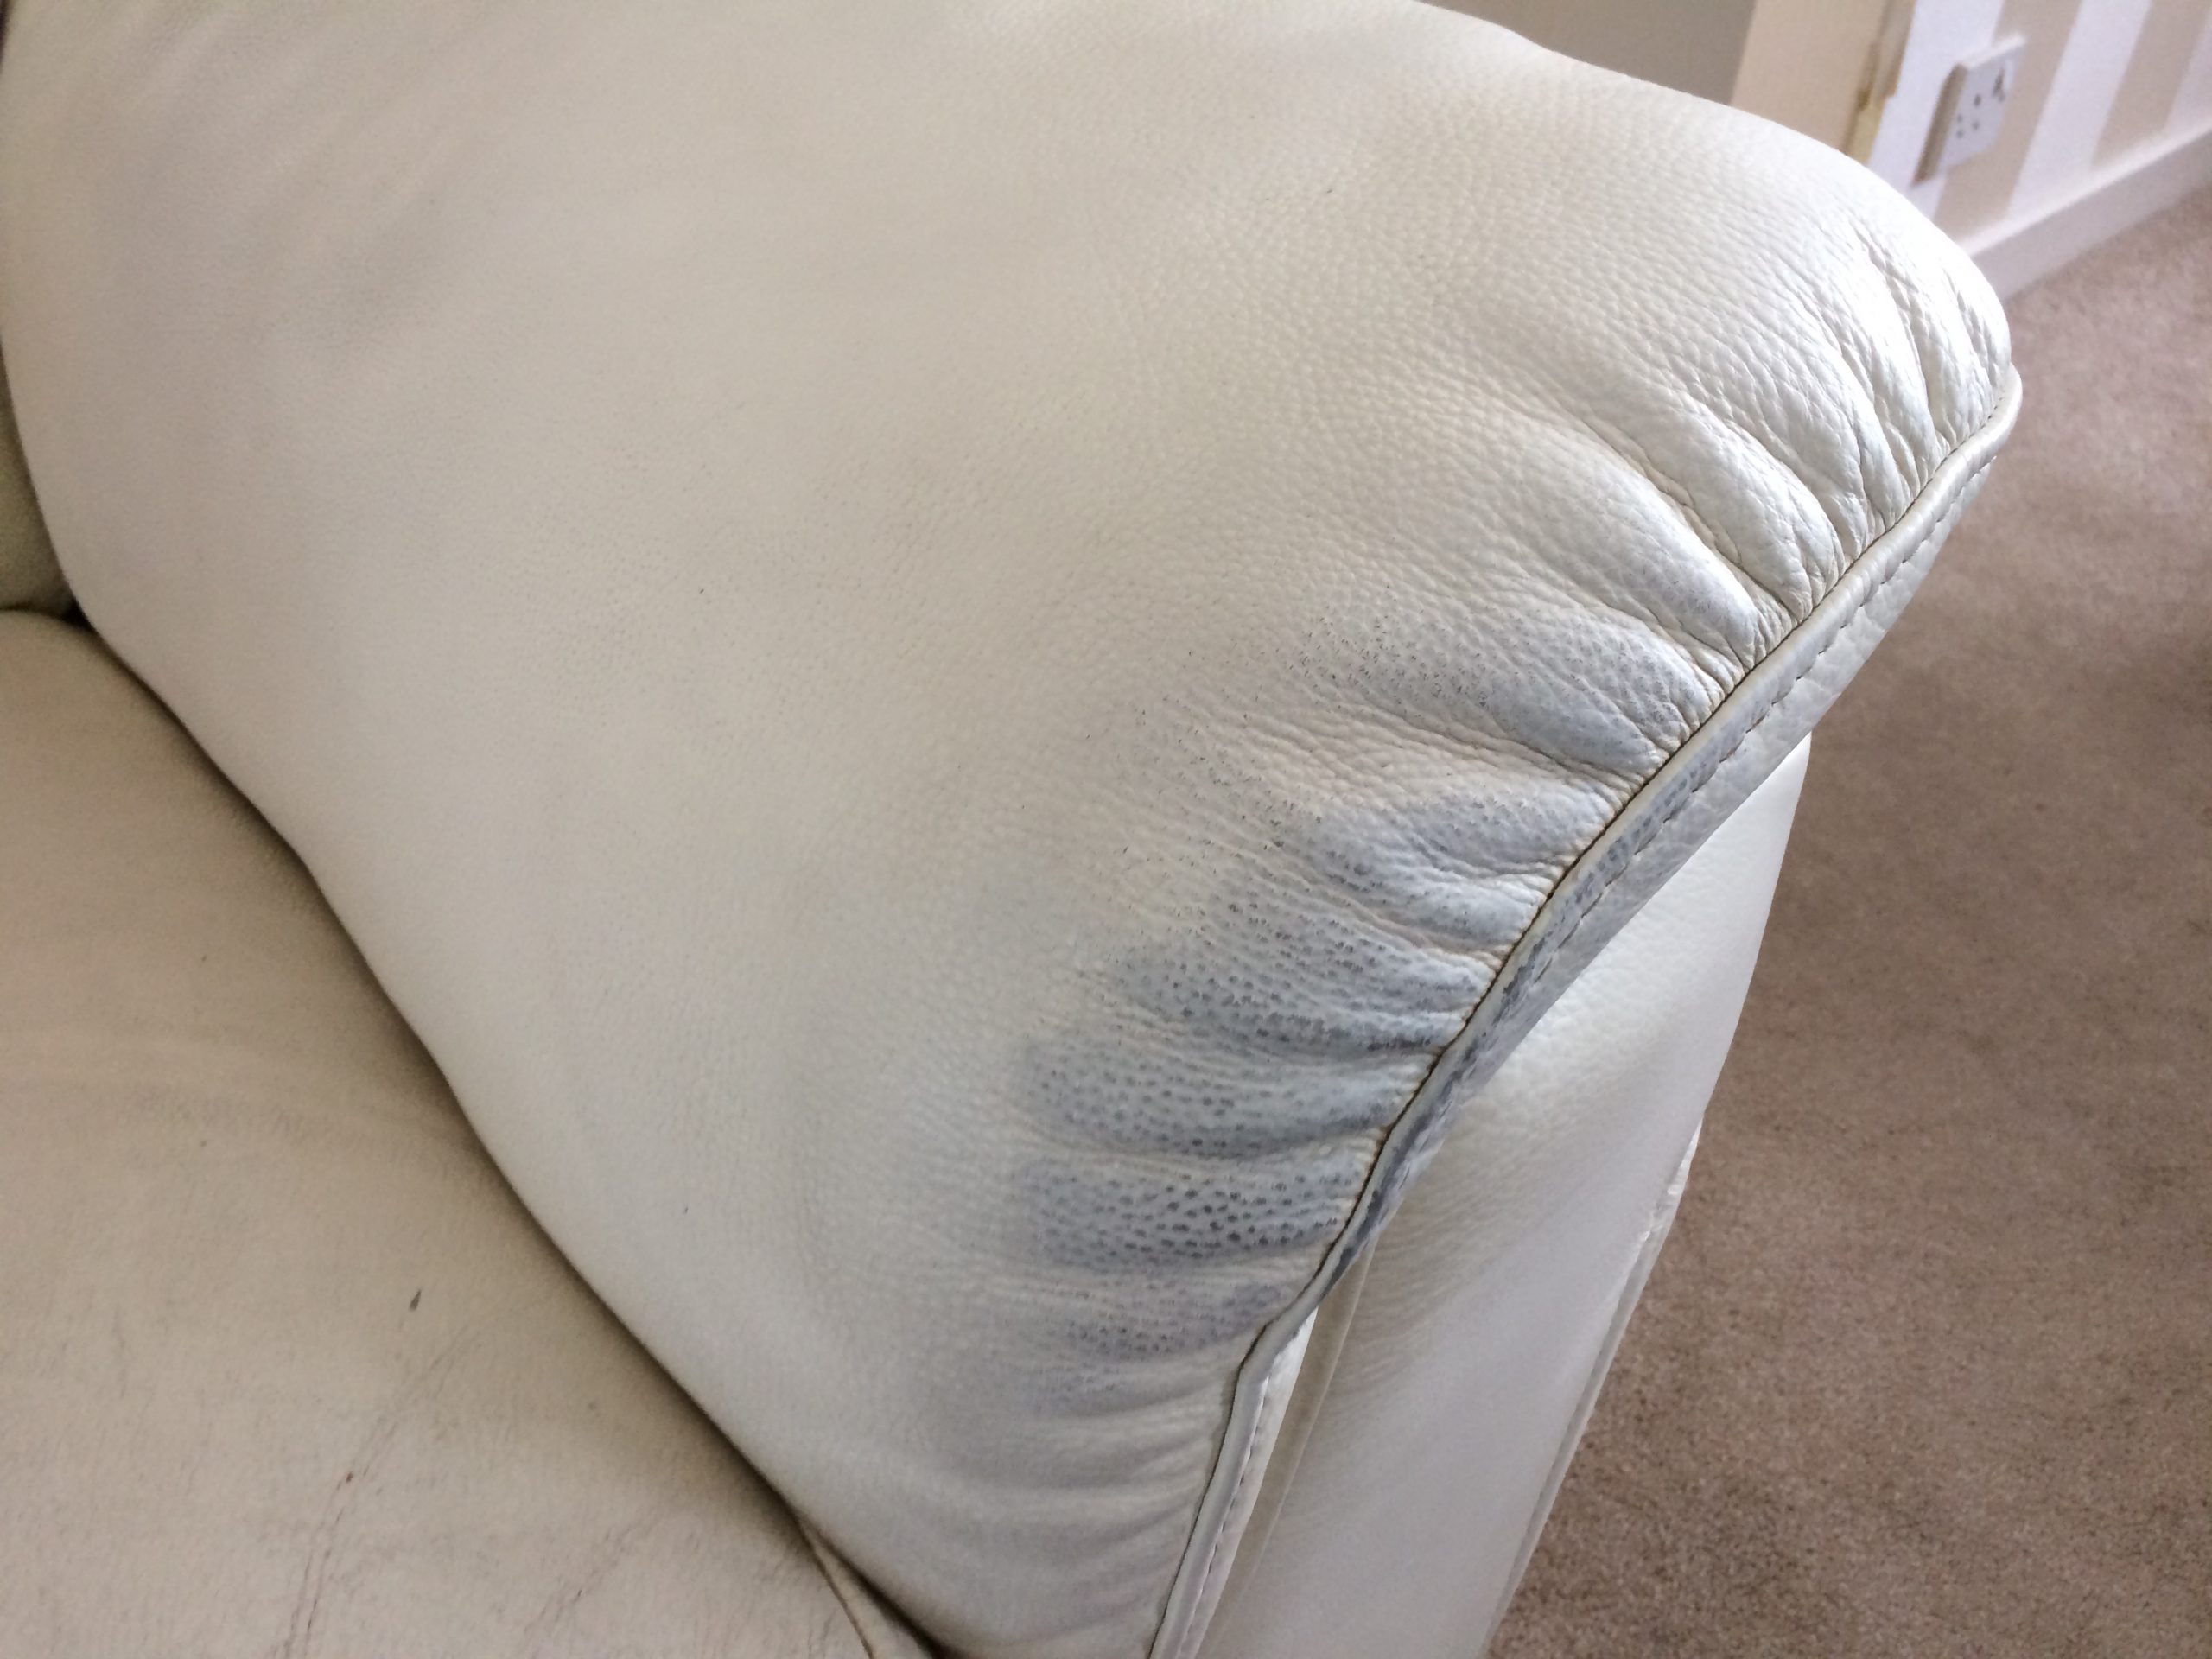 leather sofa repairs cost